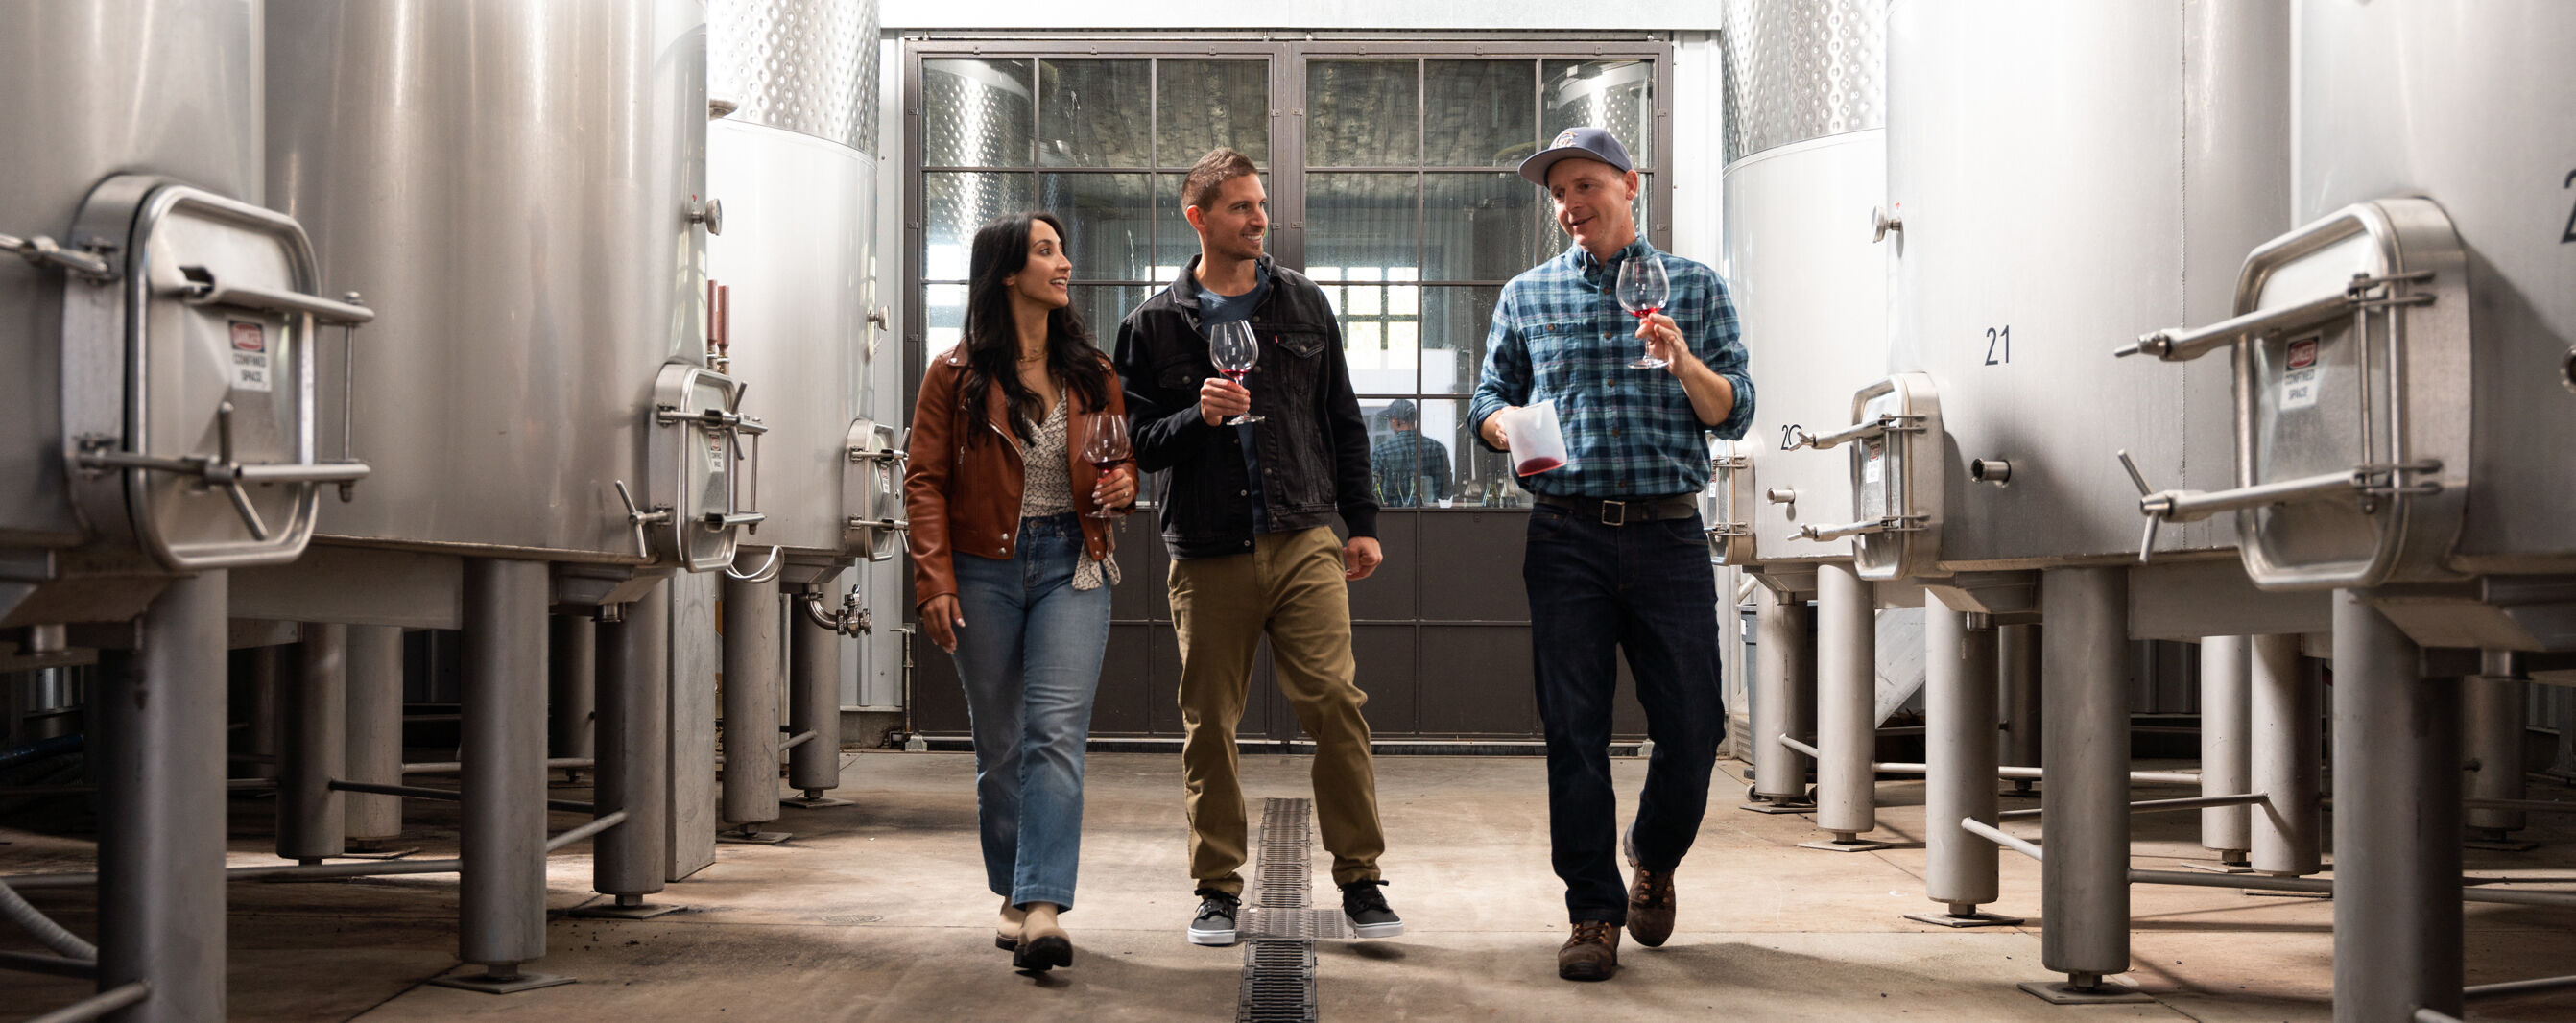 Copain winemaker, Ryan Zepaltas, walking in Copain winery with two guests.